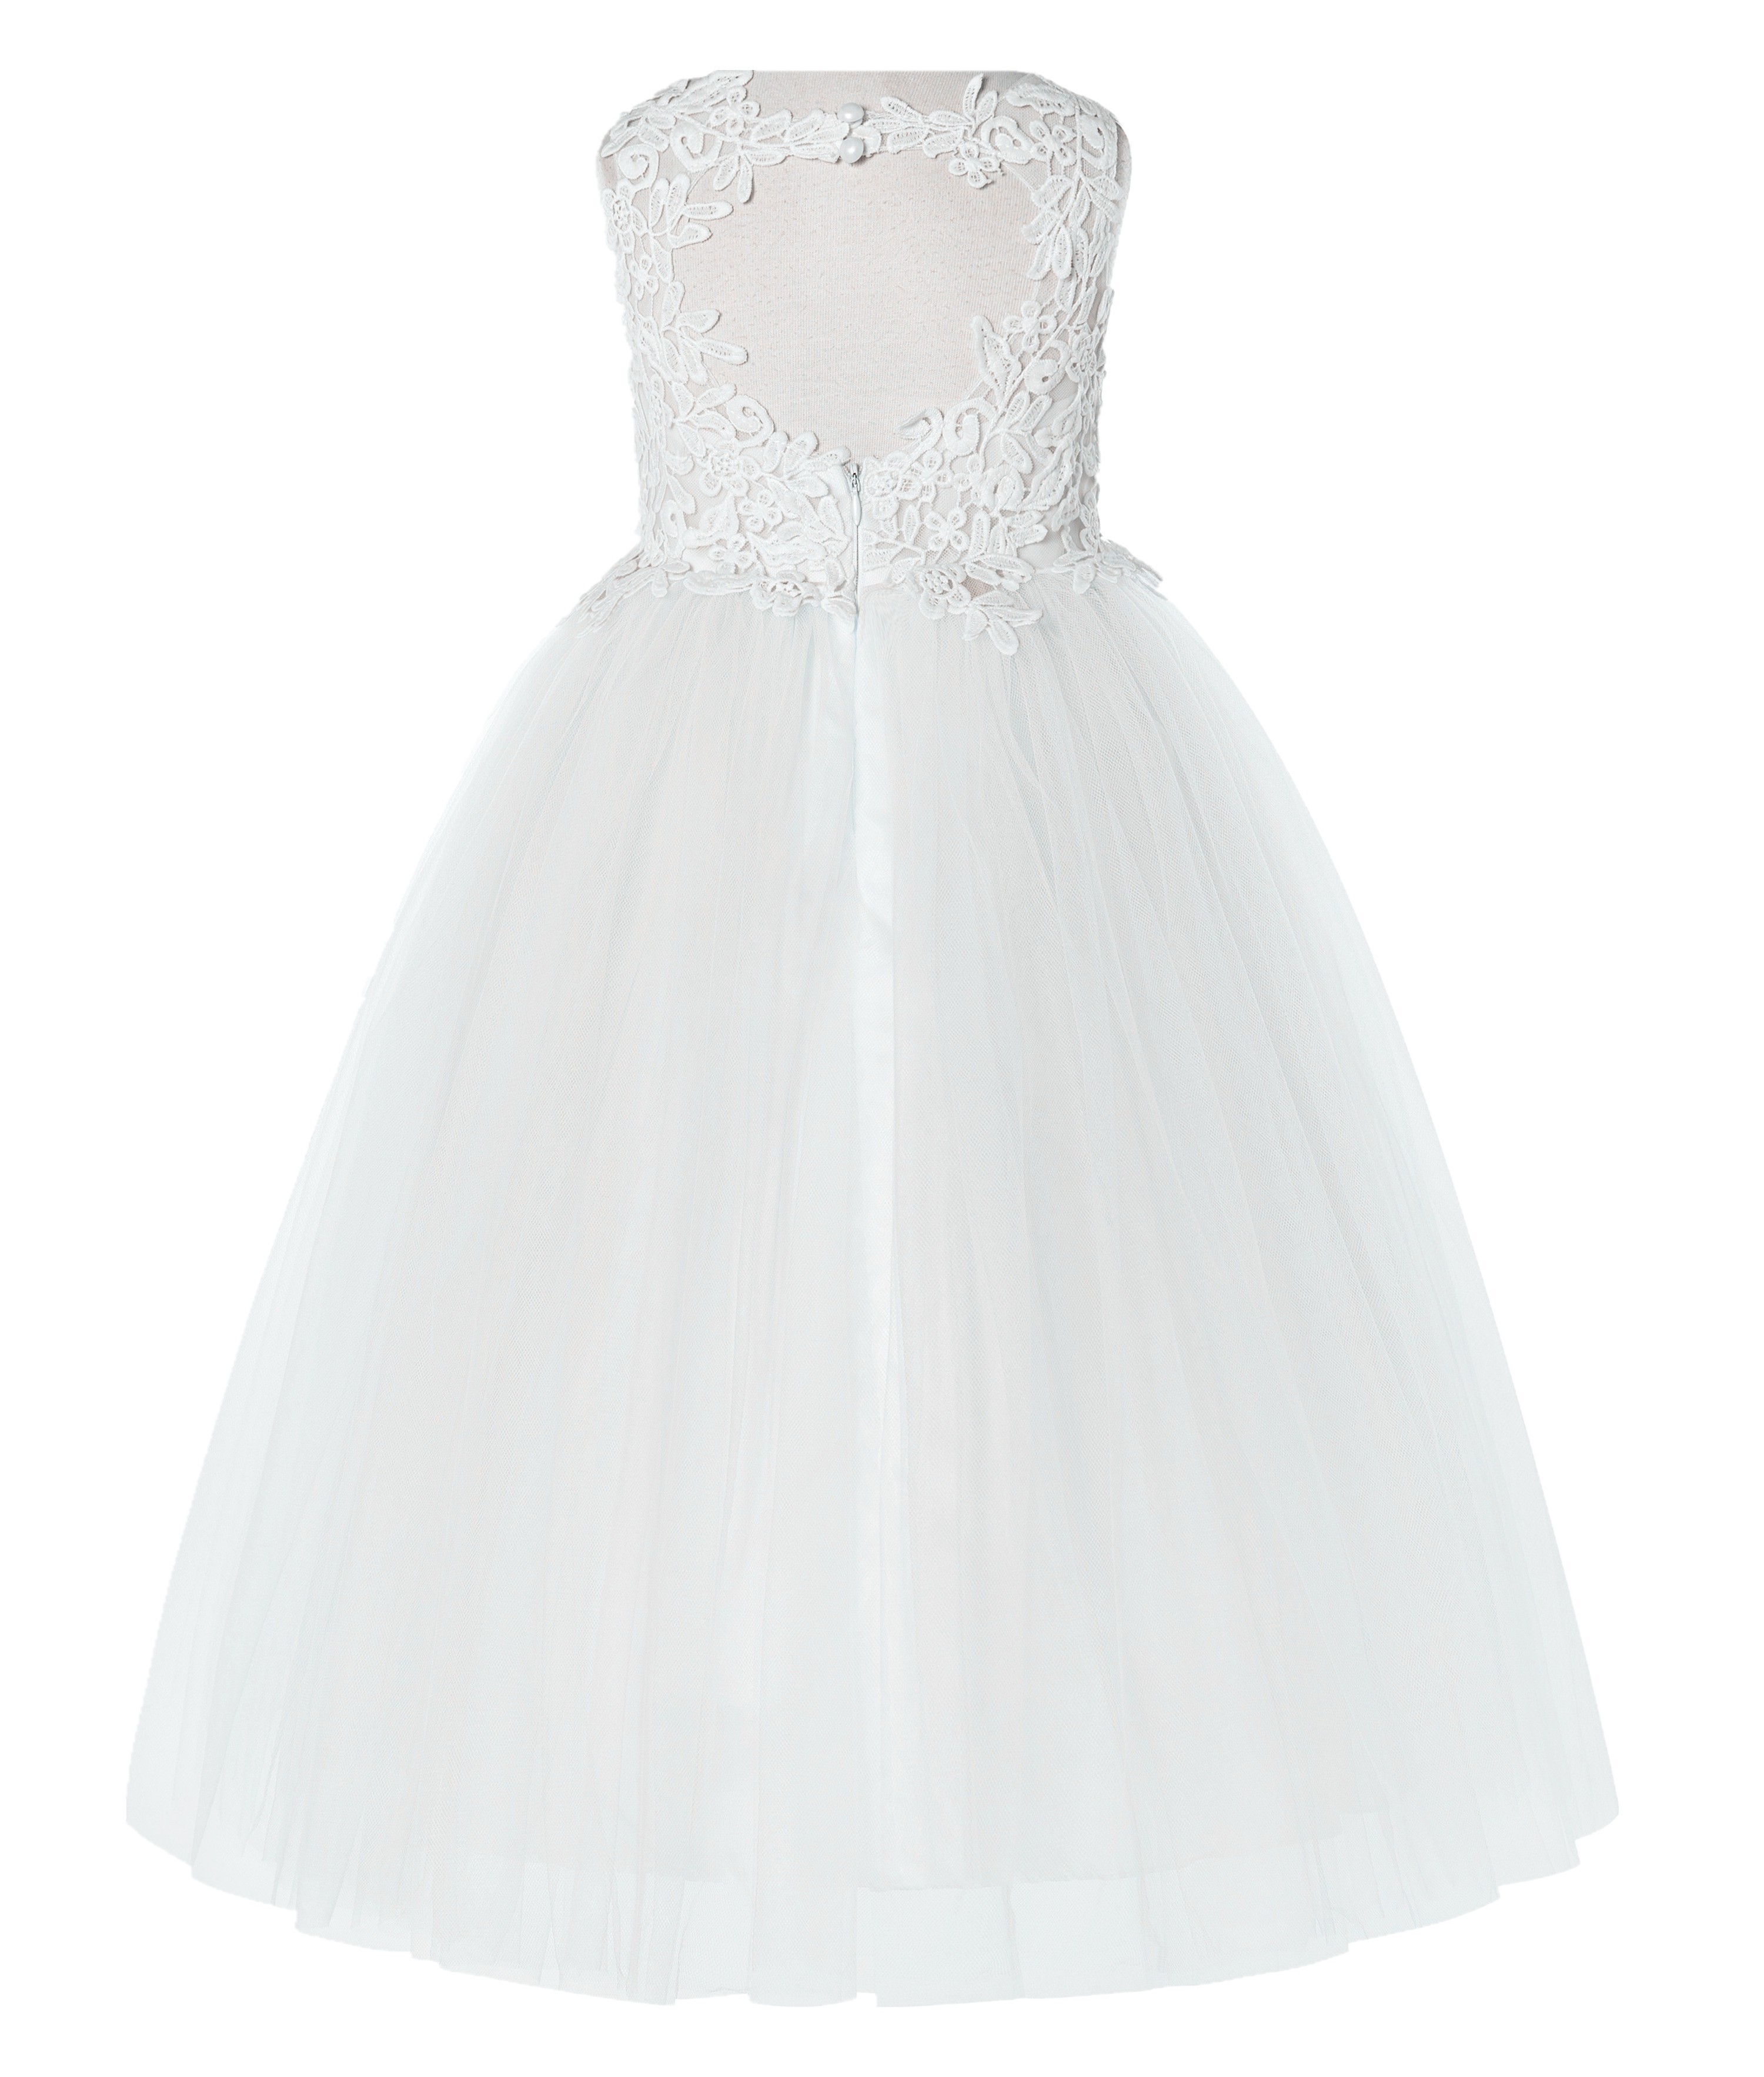 White Floral Applique Lace Dress Ivory Lace Tulle Dress 220